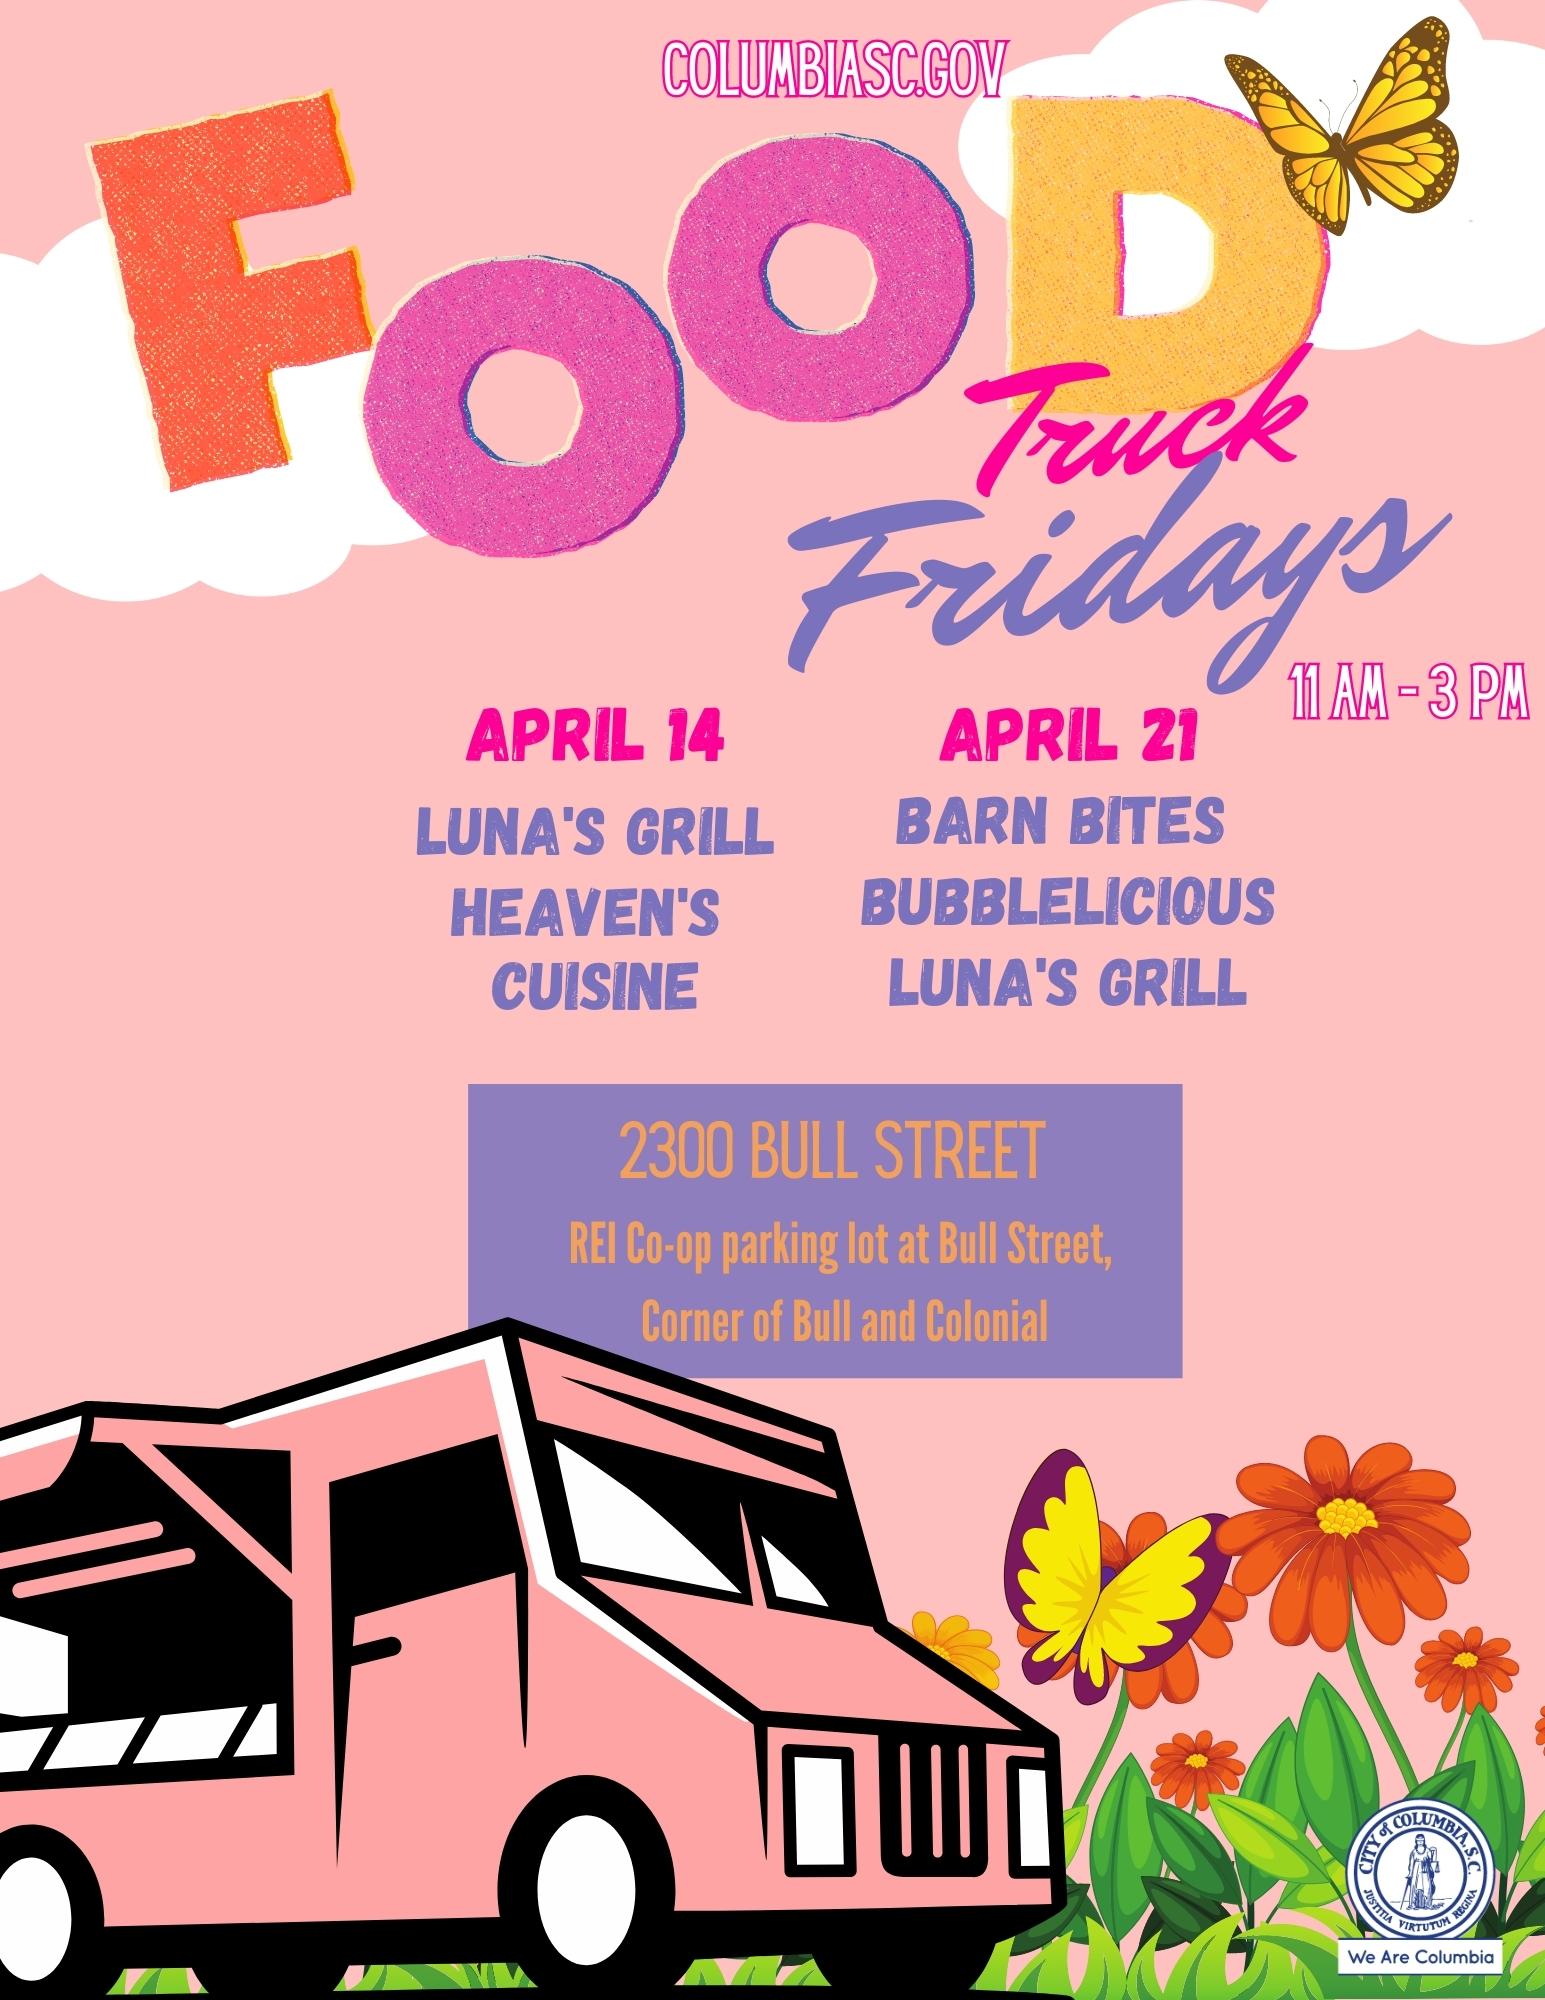 Food Truck Friday 11 